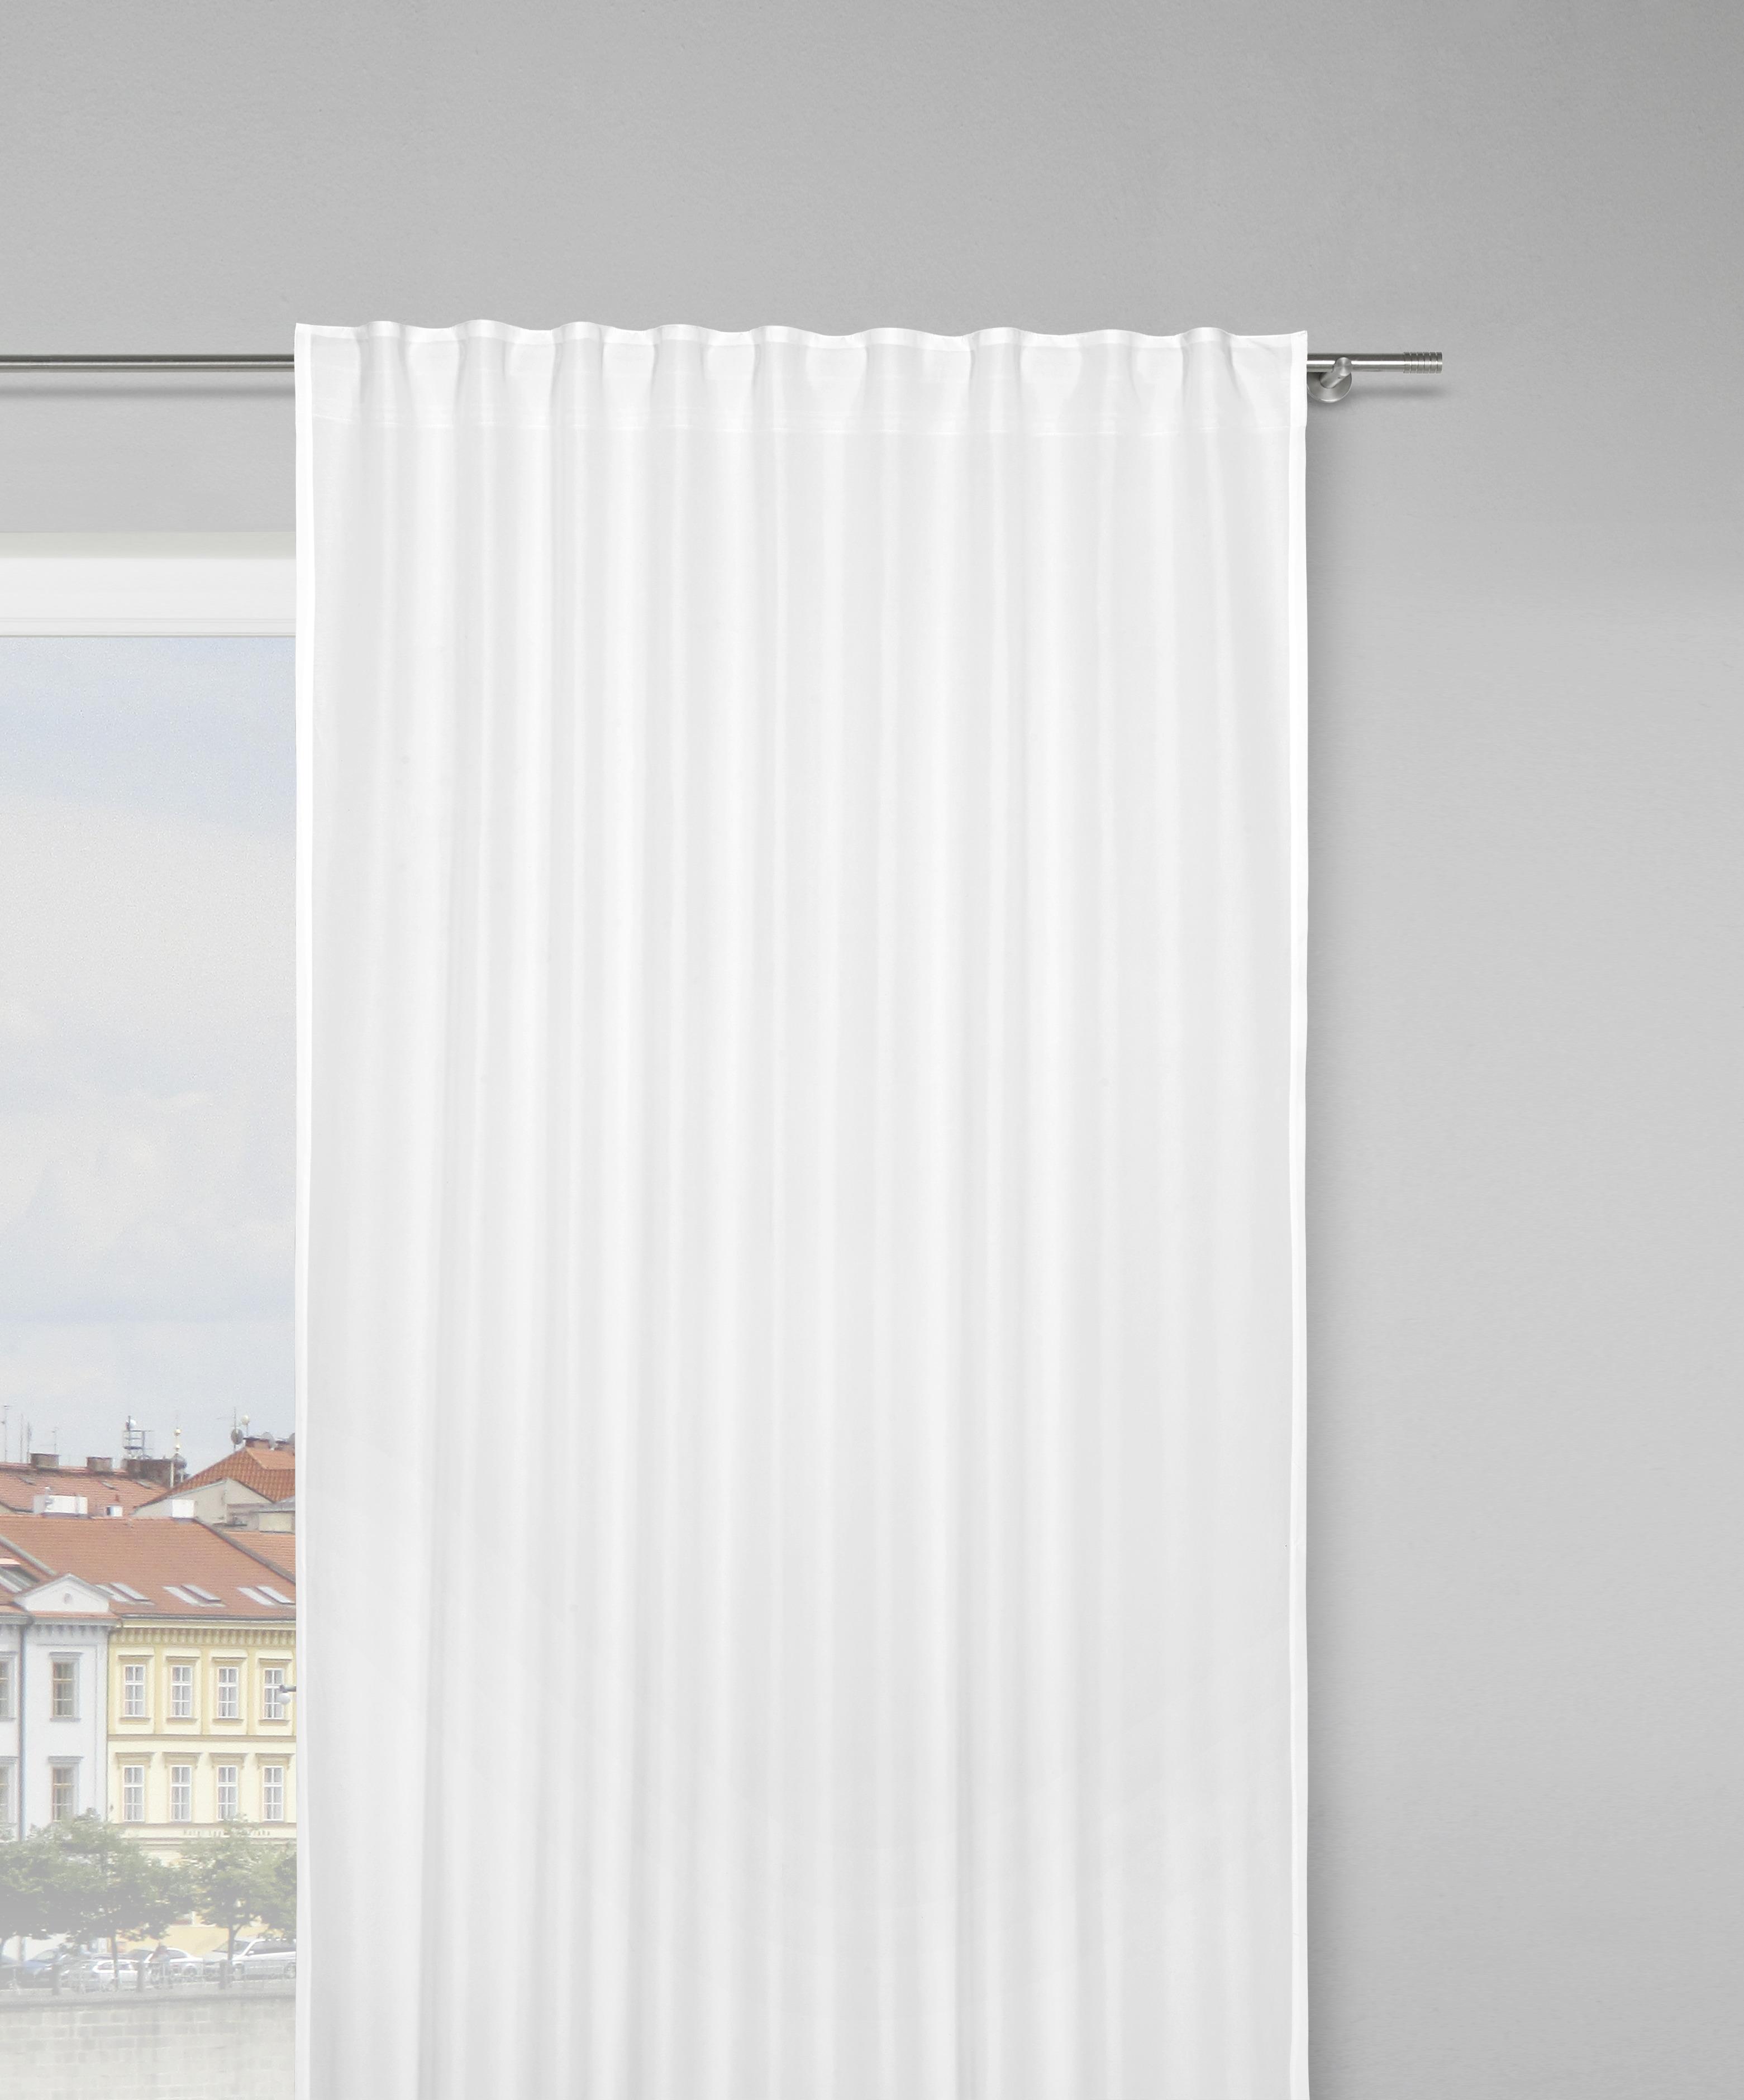 Zavjesa S Omčama Outdoor 300cm -Jub- - bijela, Modern, tekstil (140/300cm) - Modern Living